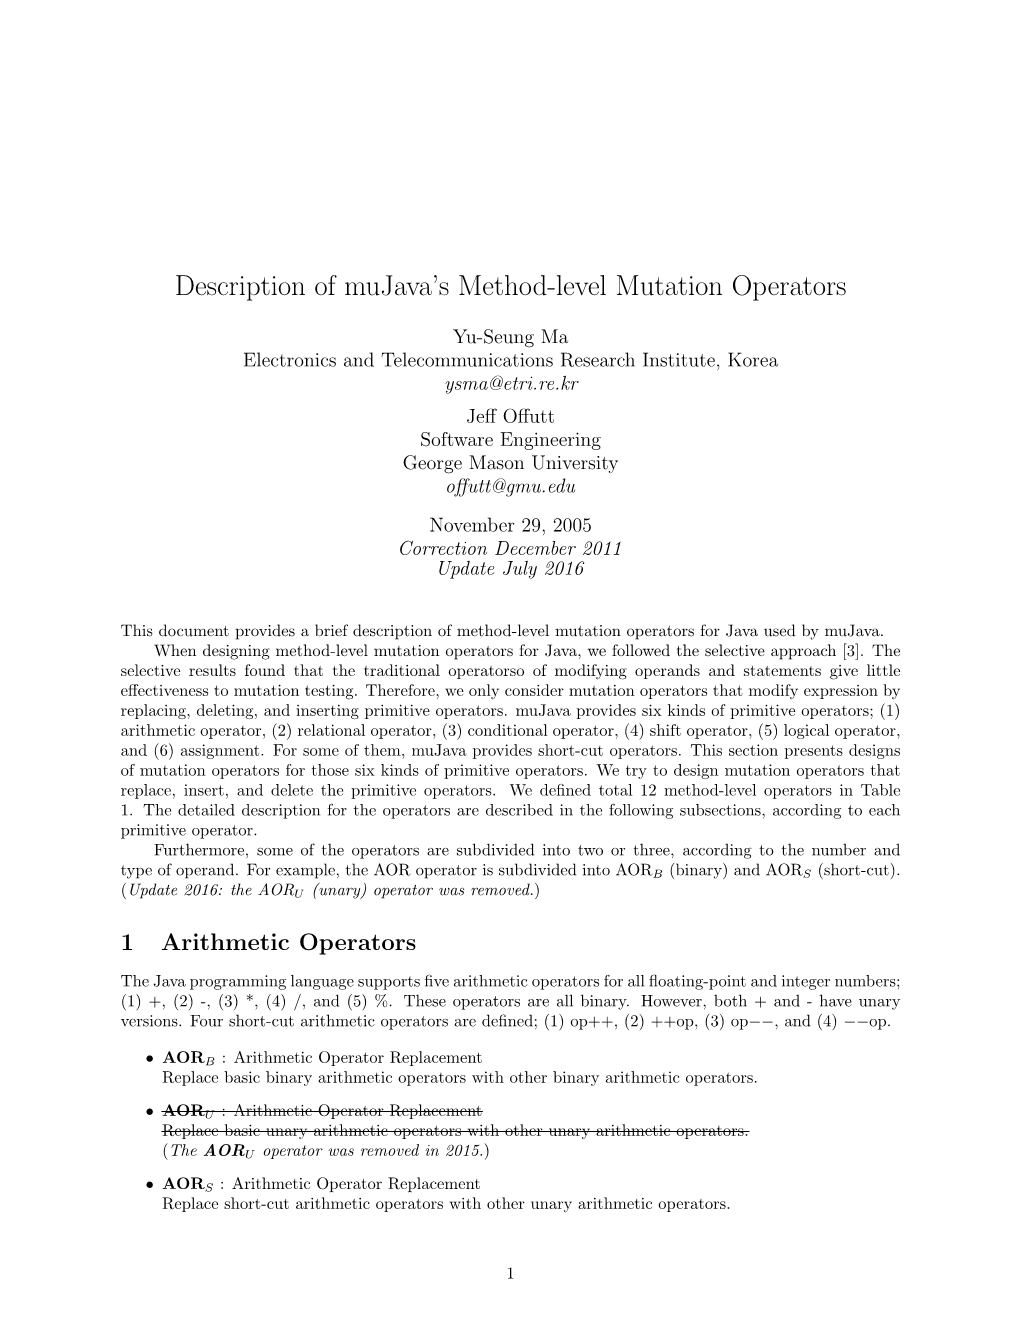 Method-Level Mutation Operators